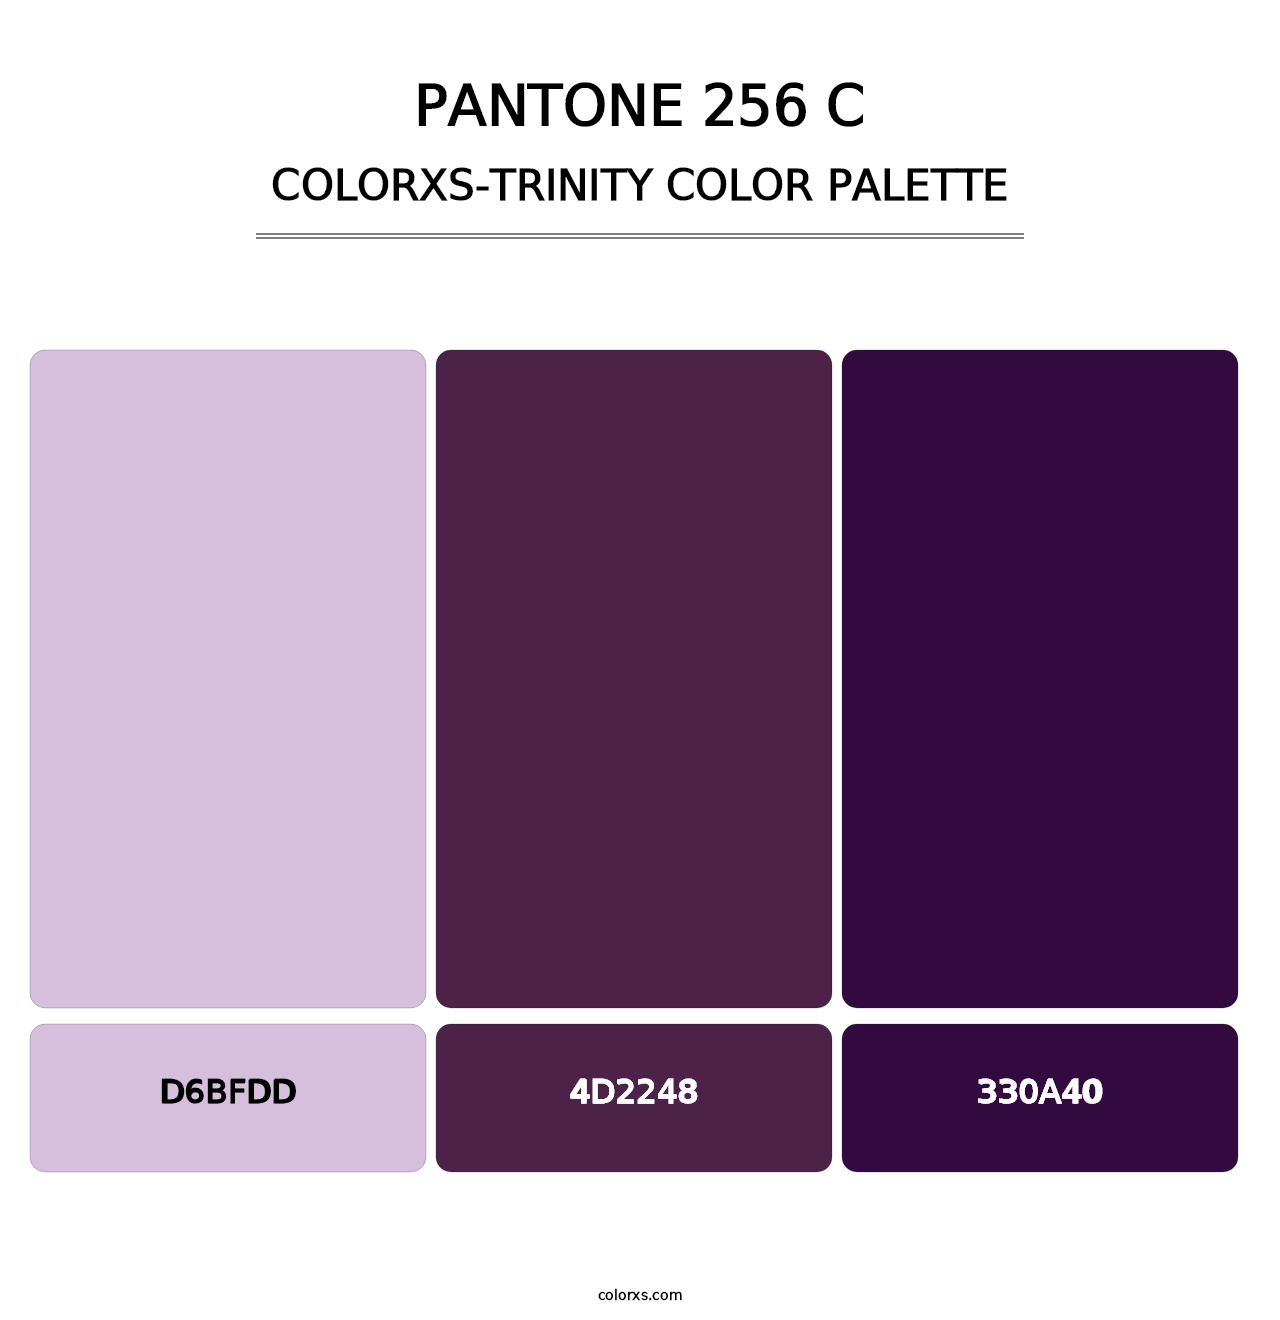 PANTONE 256 C - Colorxs Trinity Palette